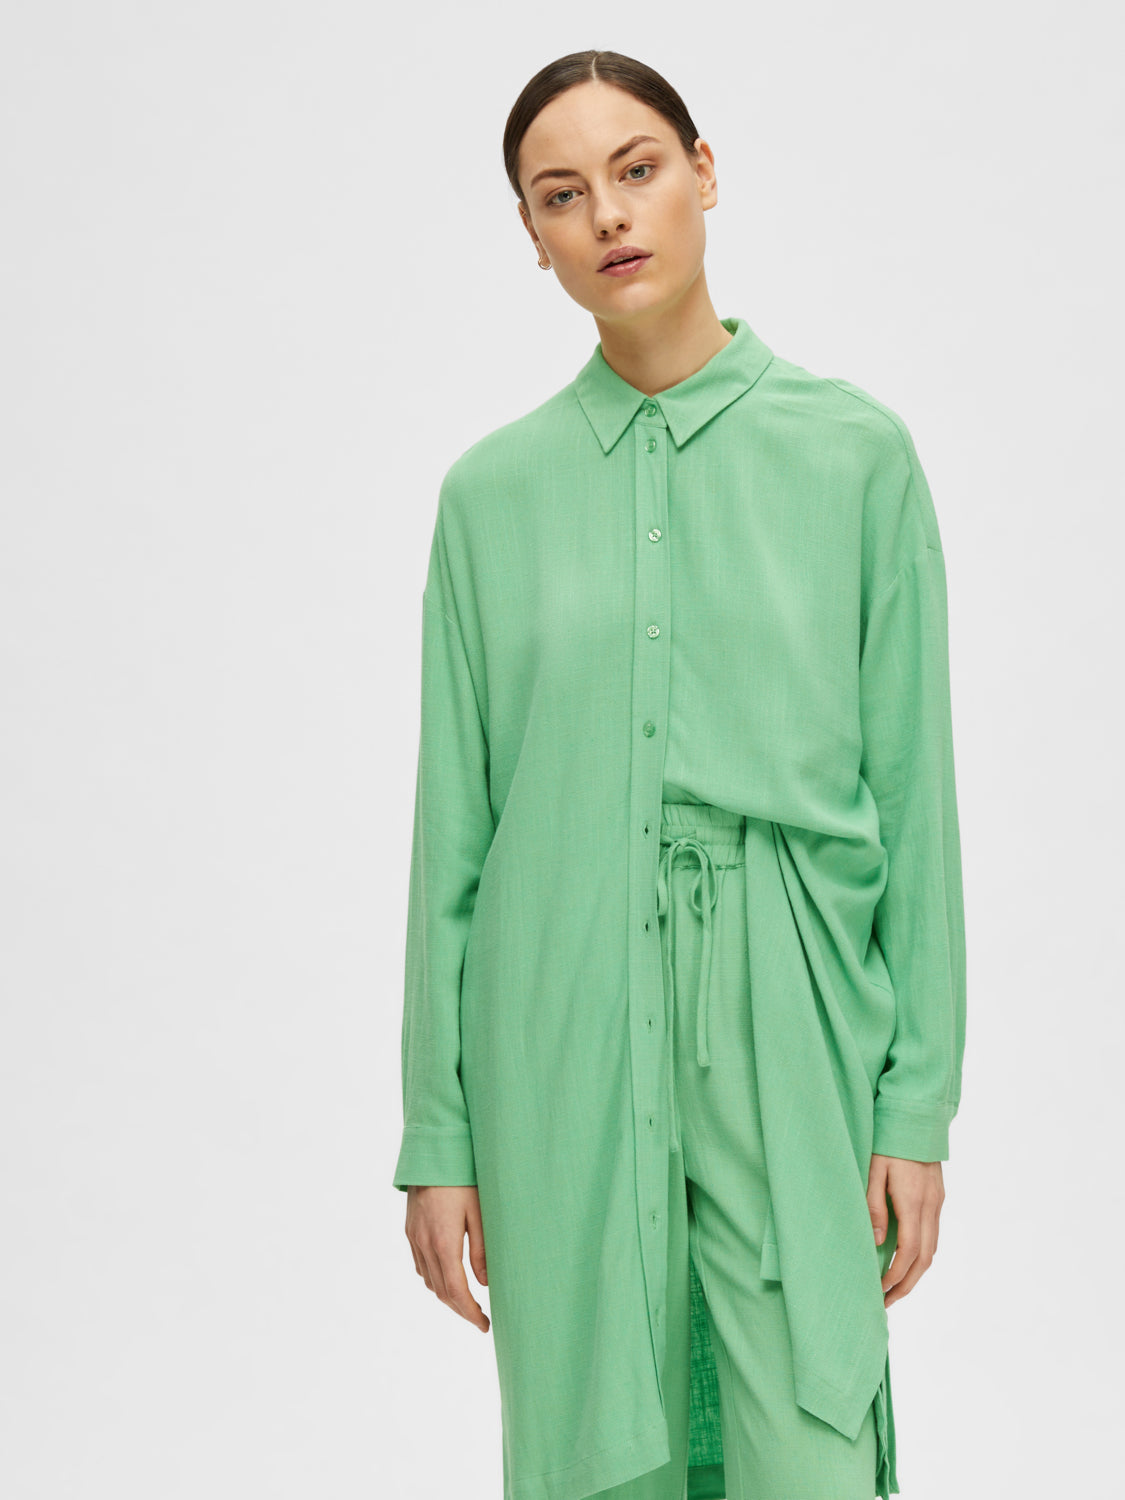 SLFVIVA-TONIA Dress - Absinthe Green